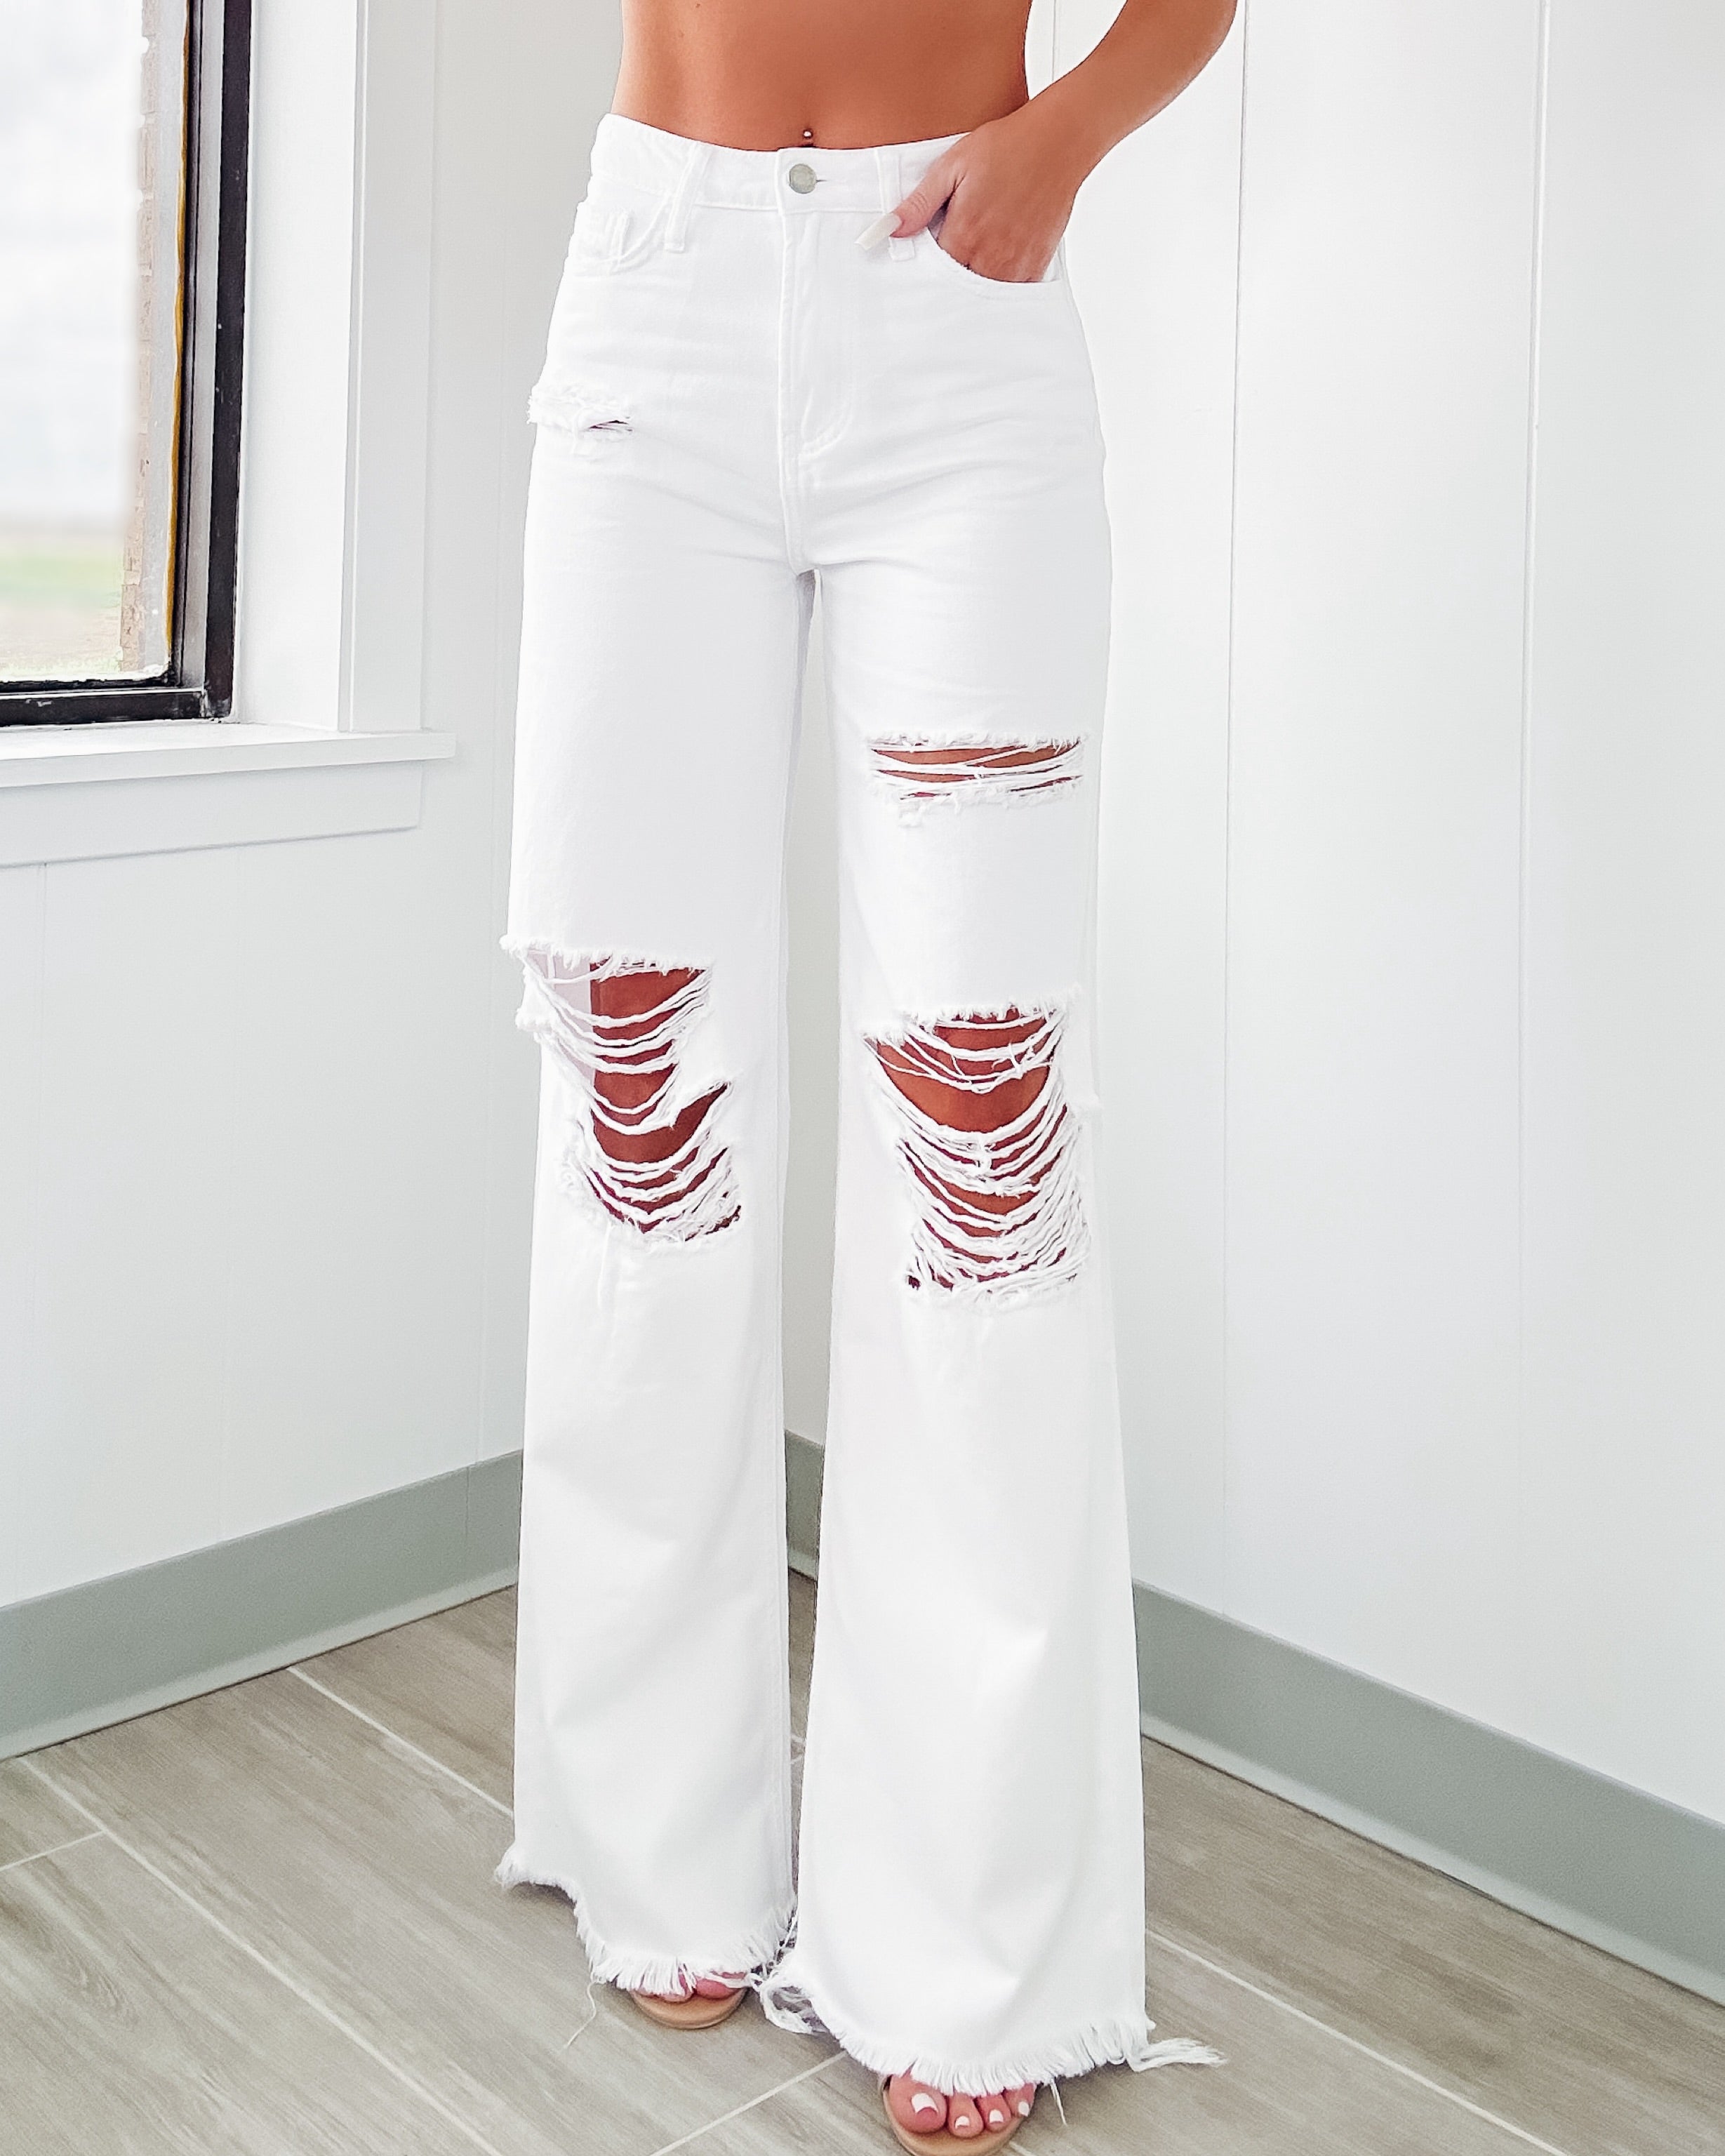 Eira 90's Vintage Distressed Jeans - White